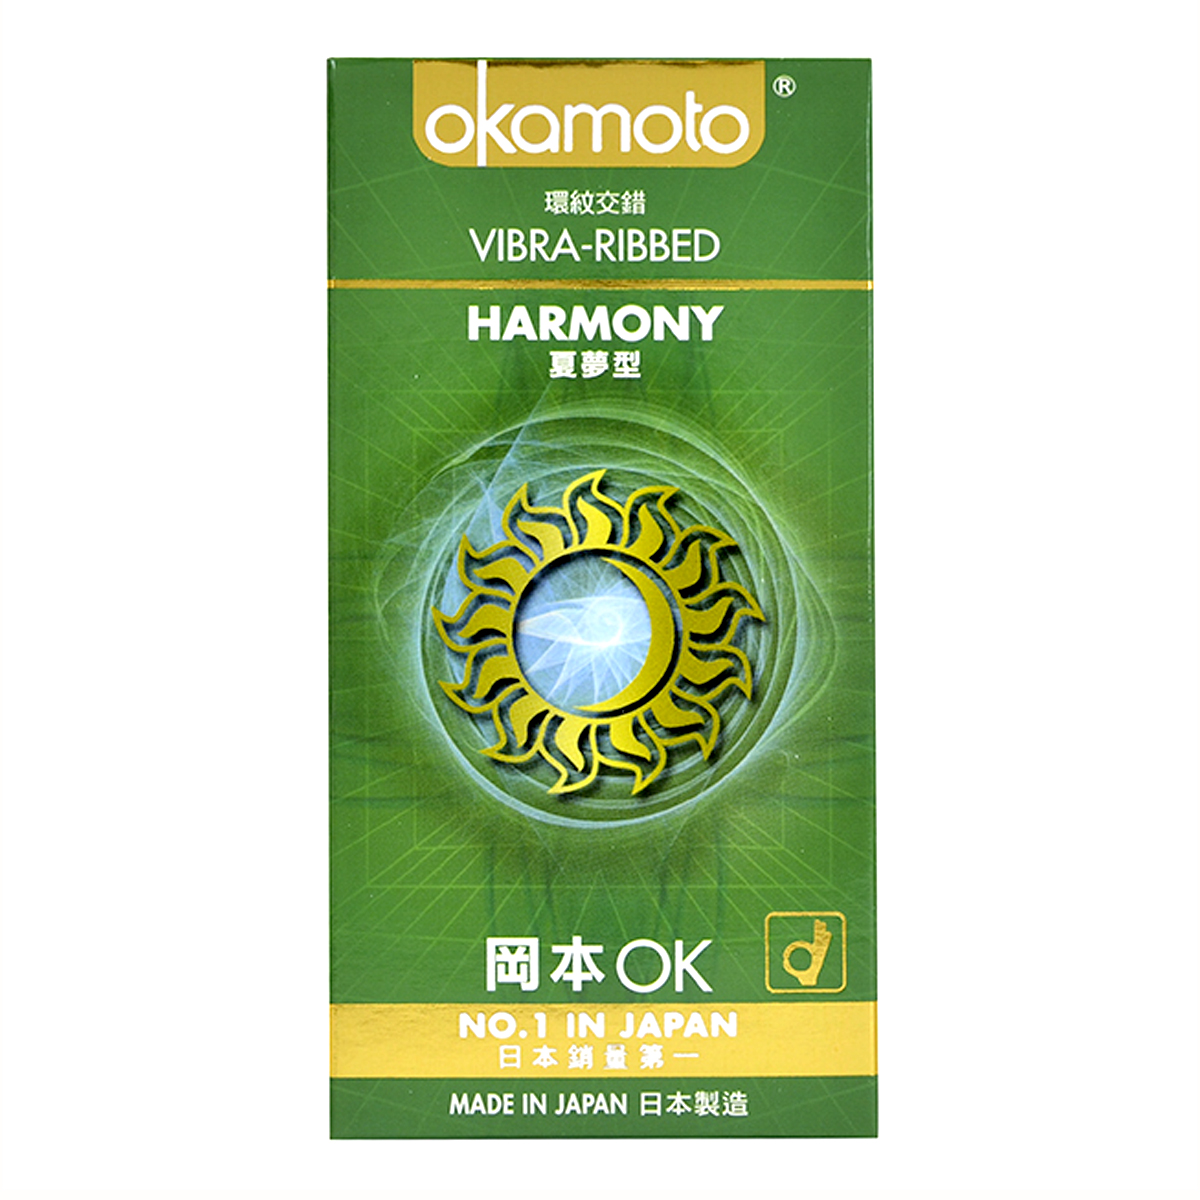 Bao cao su gai sọc Okamoto Harmony -Hộp 10 cái (Size trung bình) - Sian.vn  쇼핑 센터